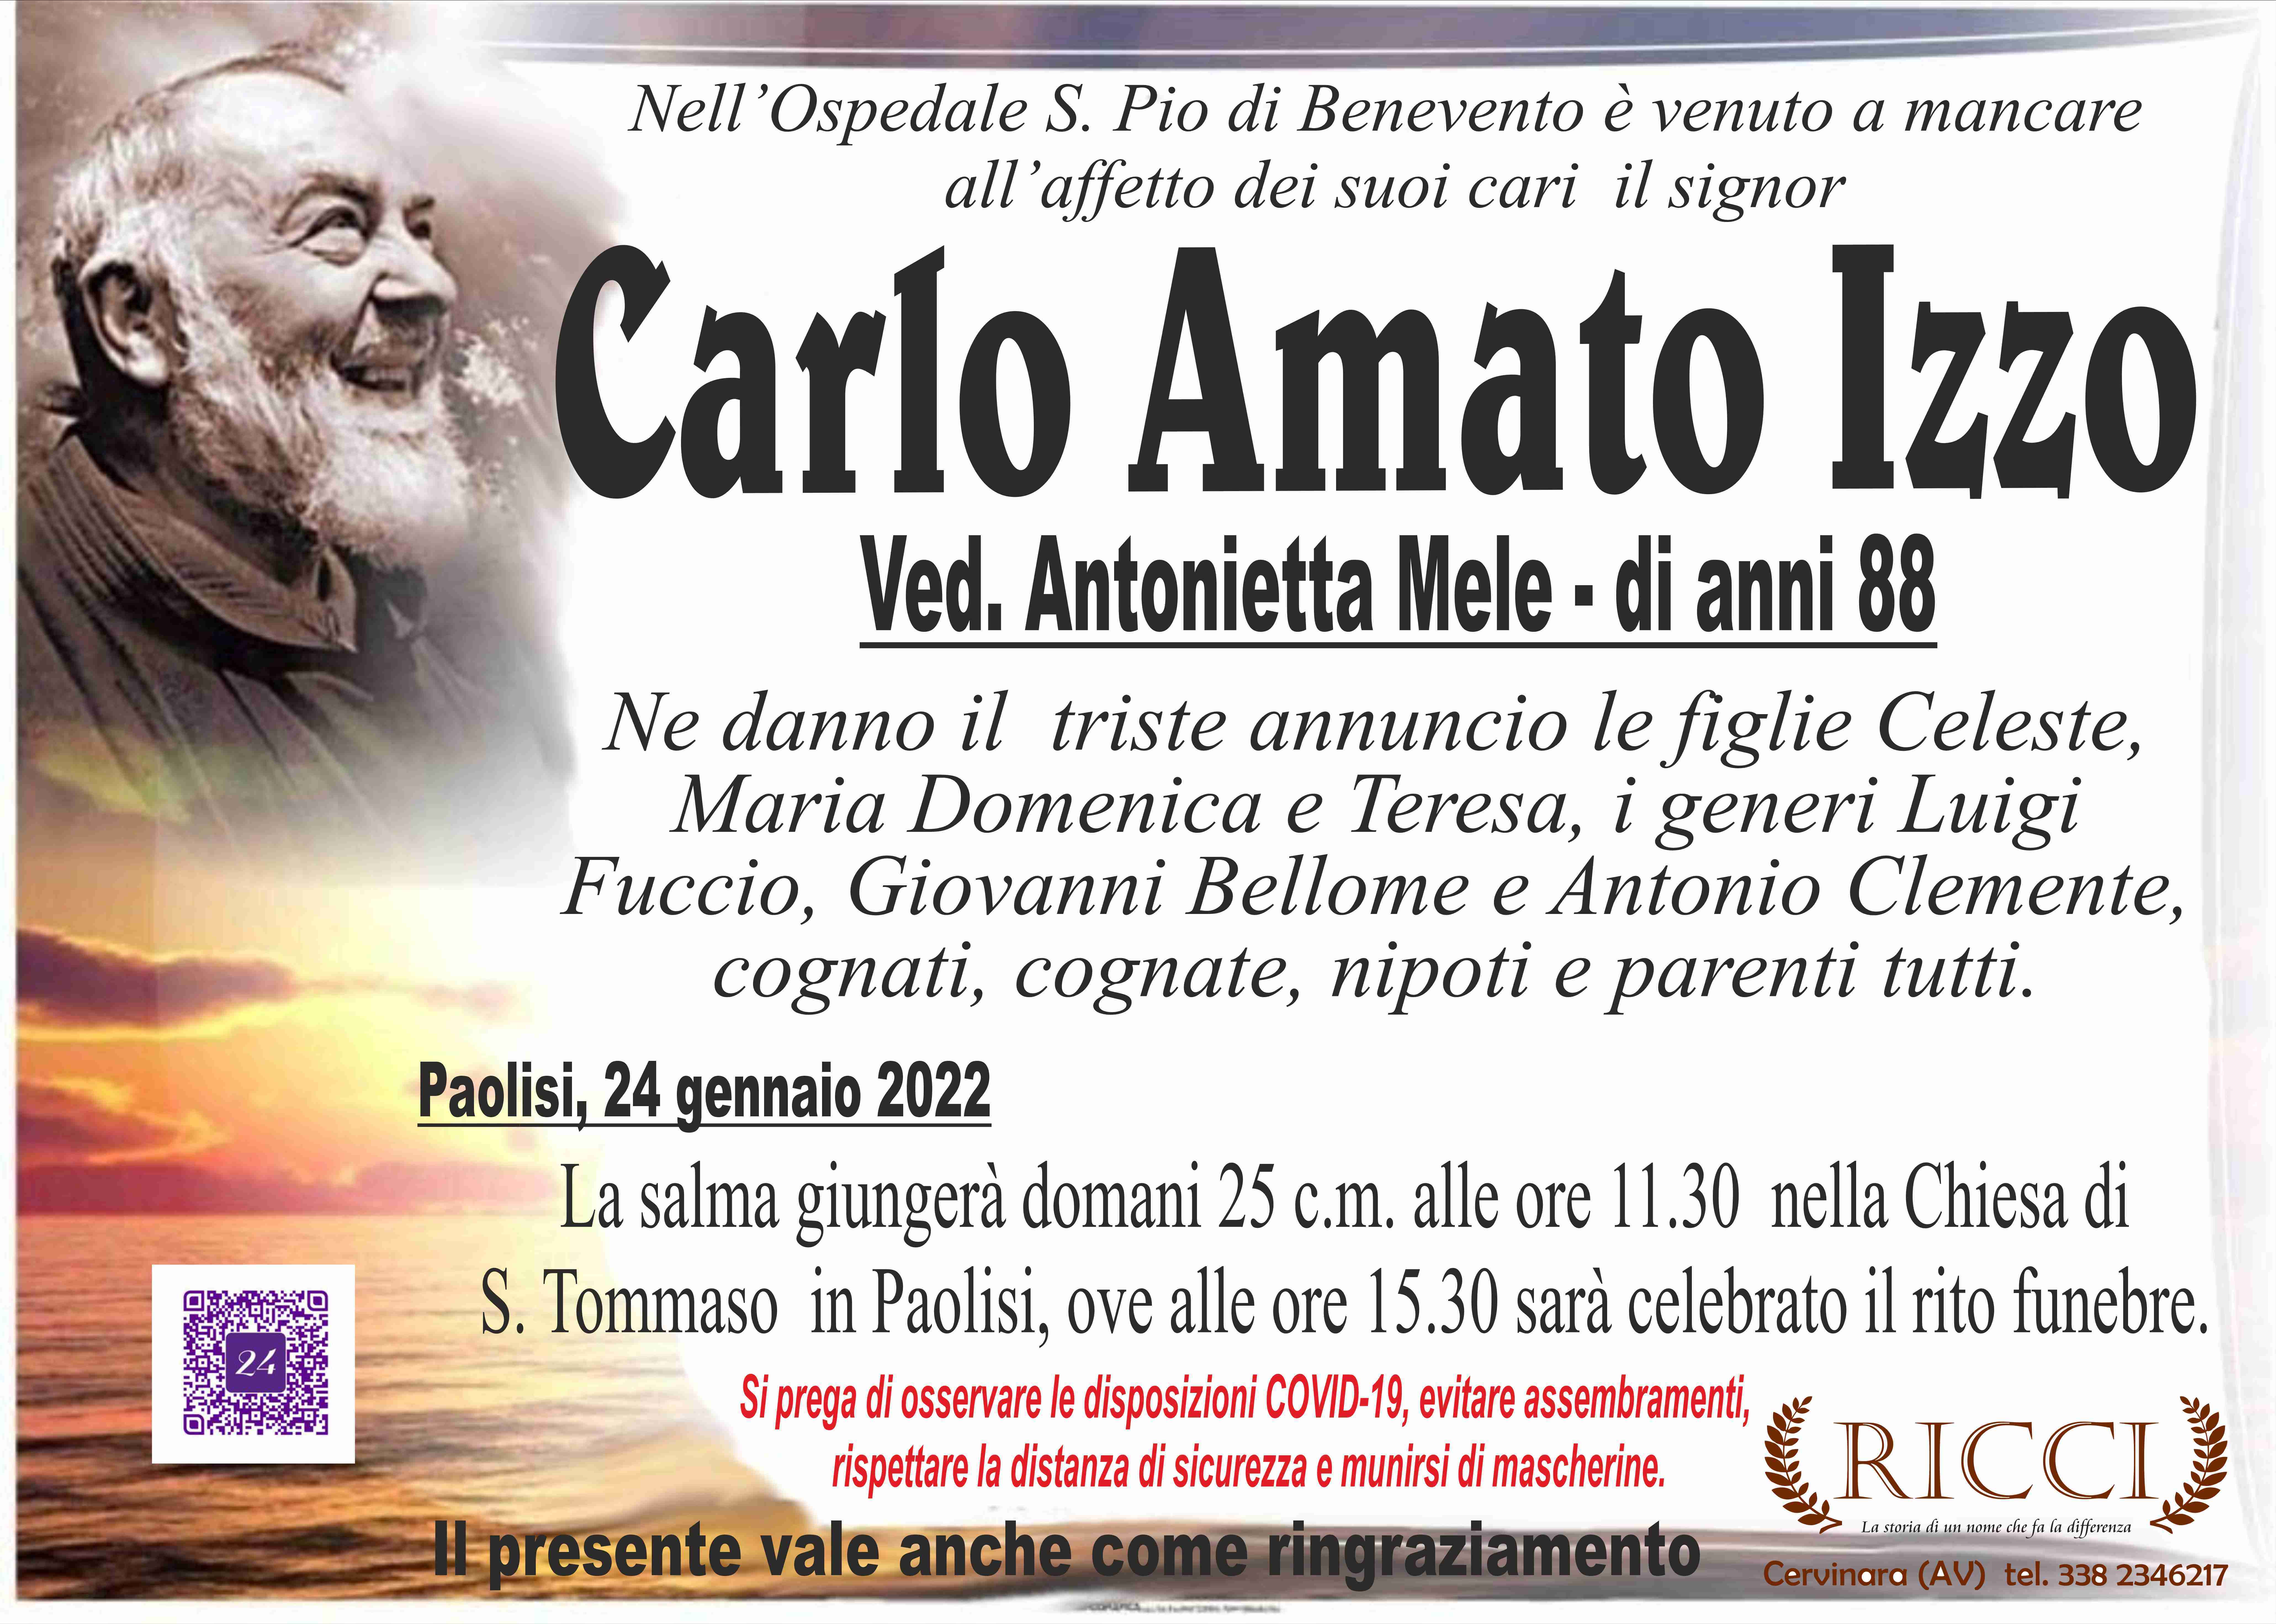 Carlo Amato Izzo